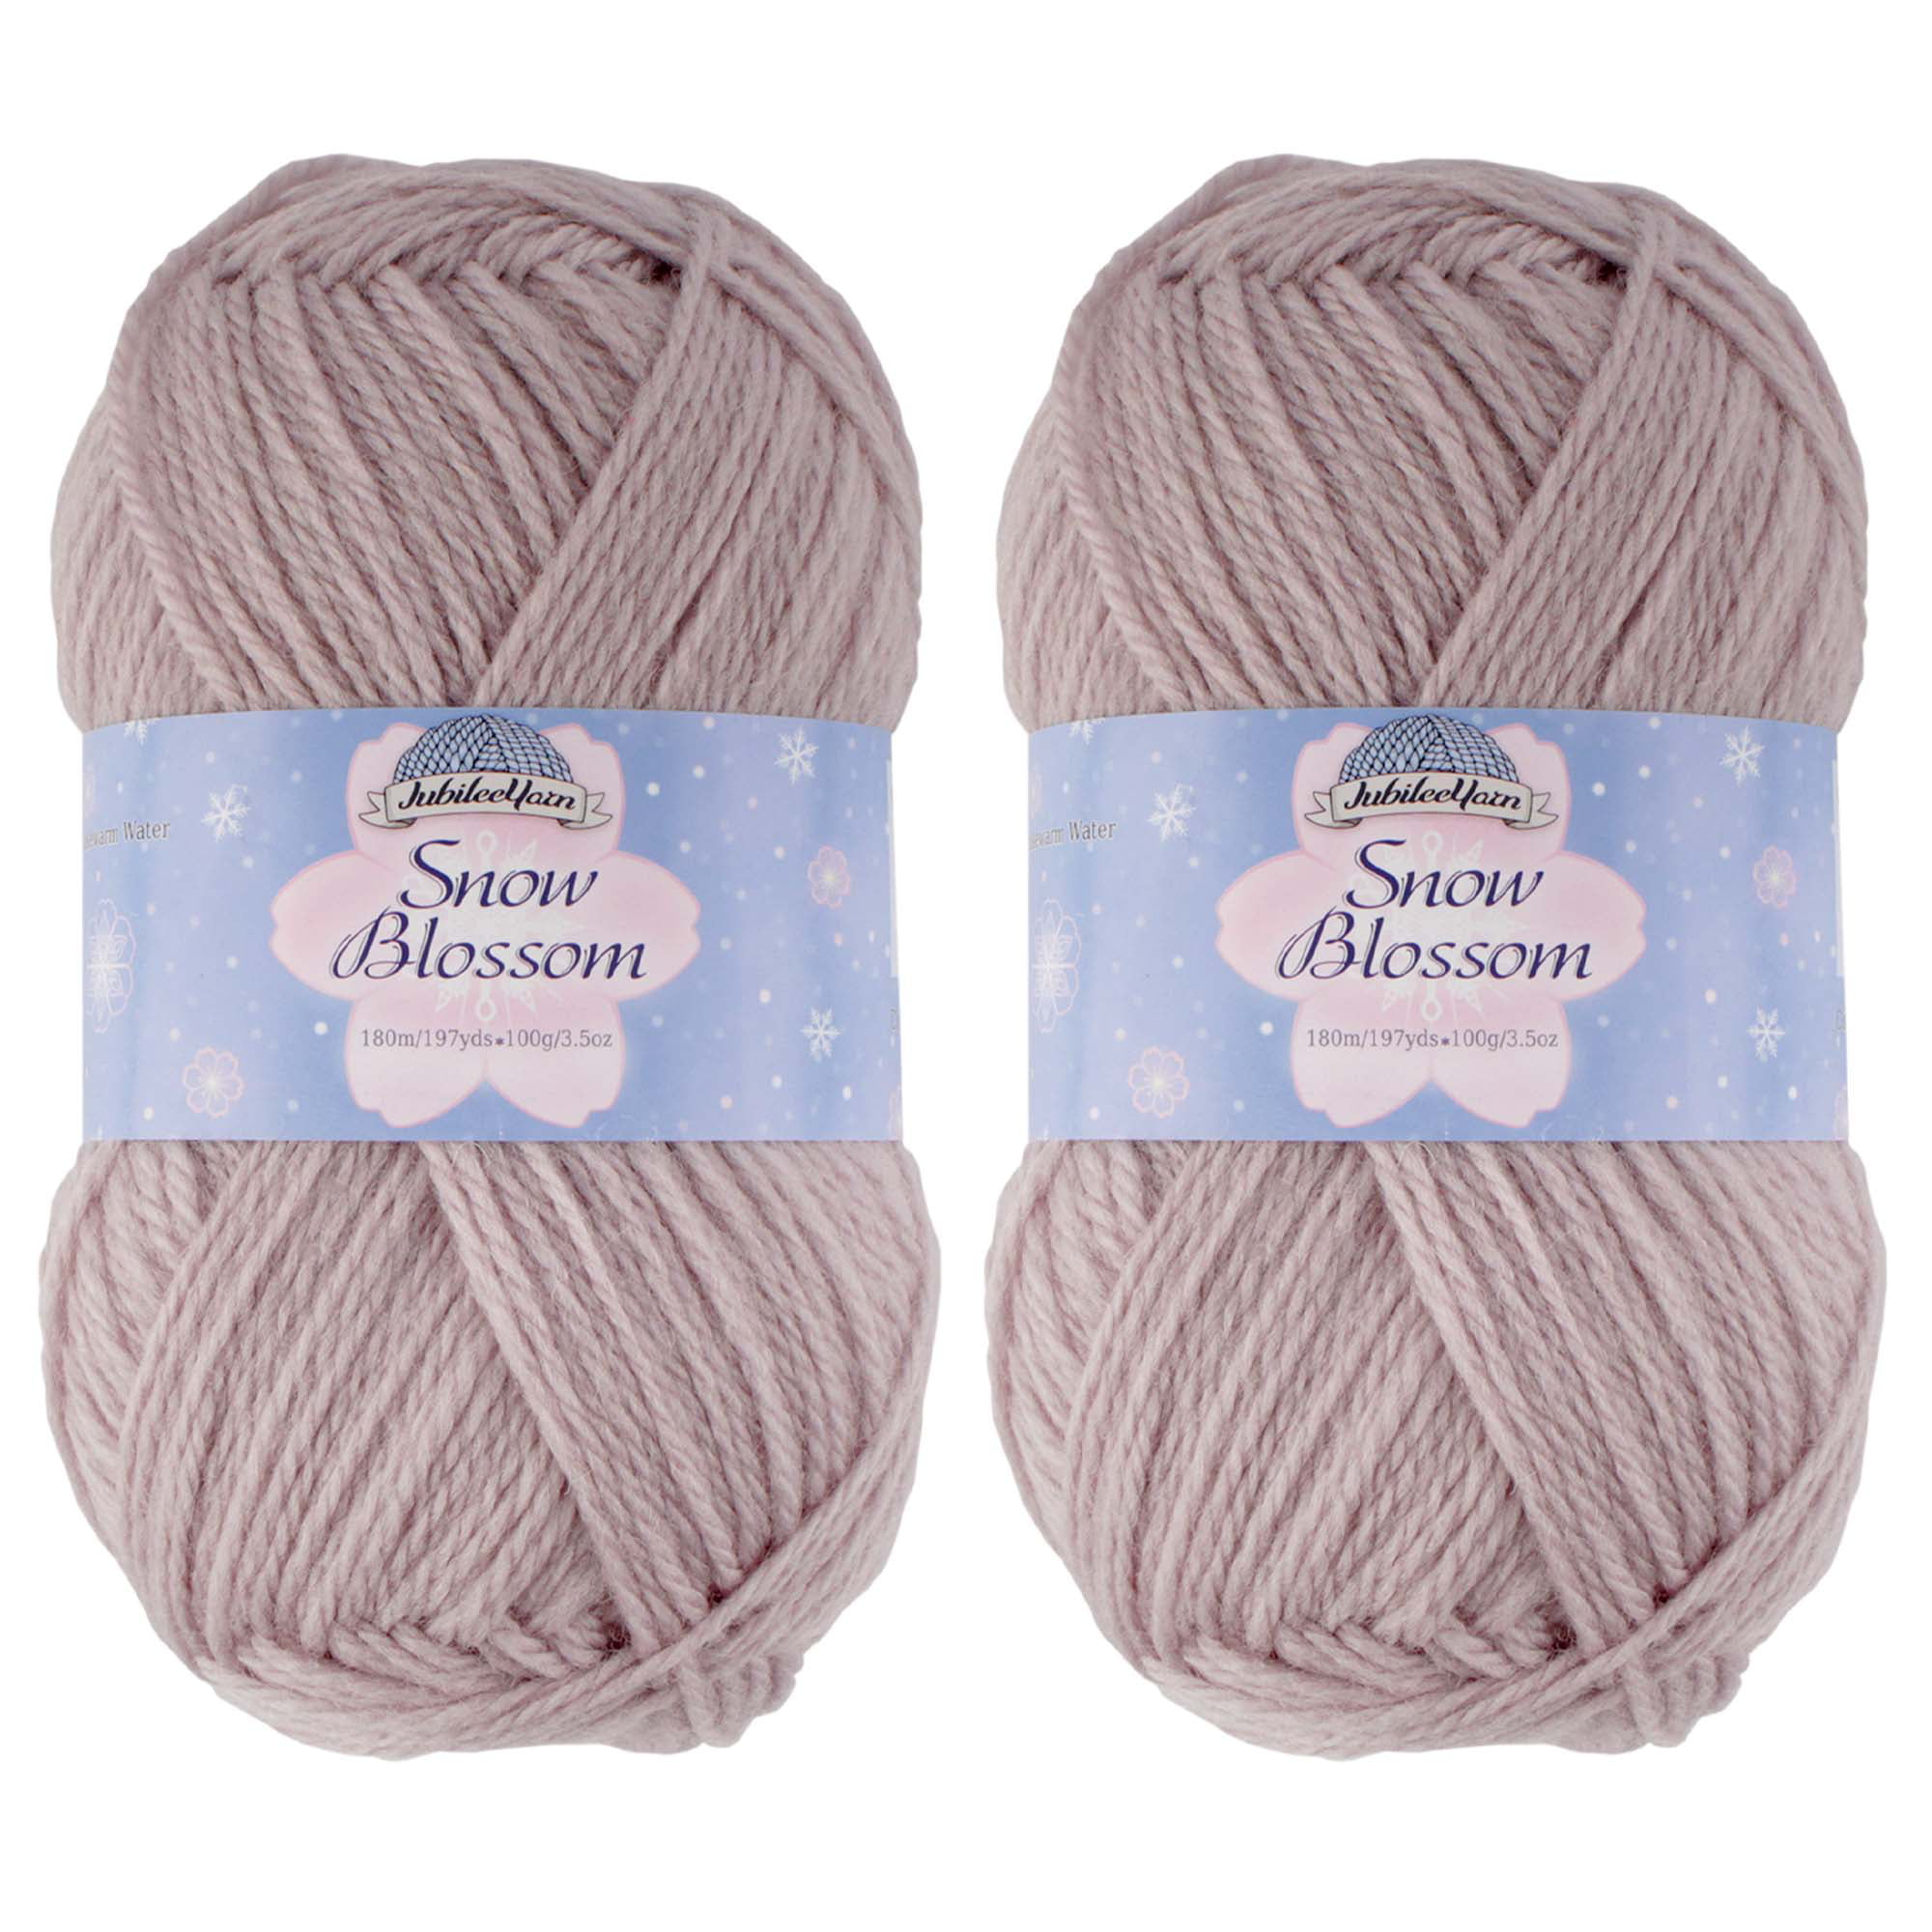 Wool Yarn Worsted Weight - Snow Blossom Yarn - JubileeYarn - Drowsy Dusk -  2 Skeins